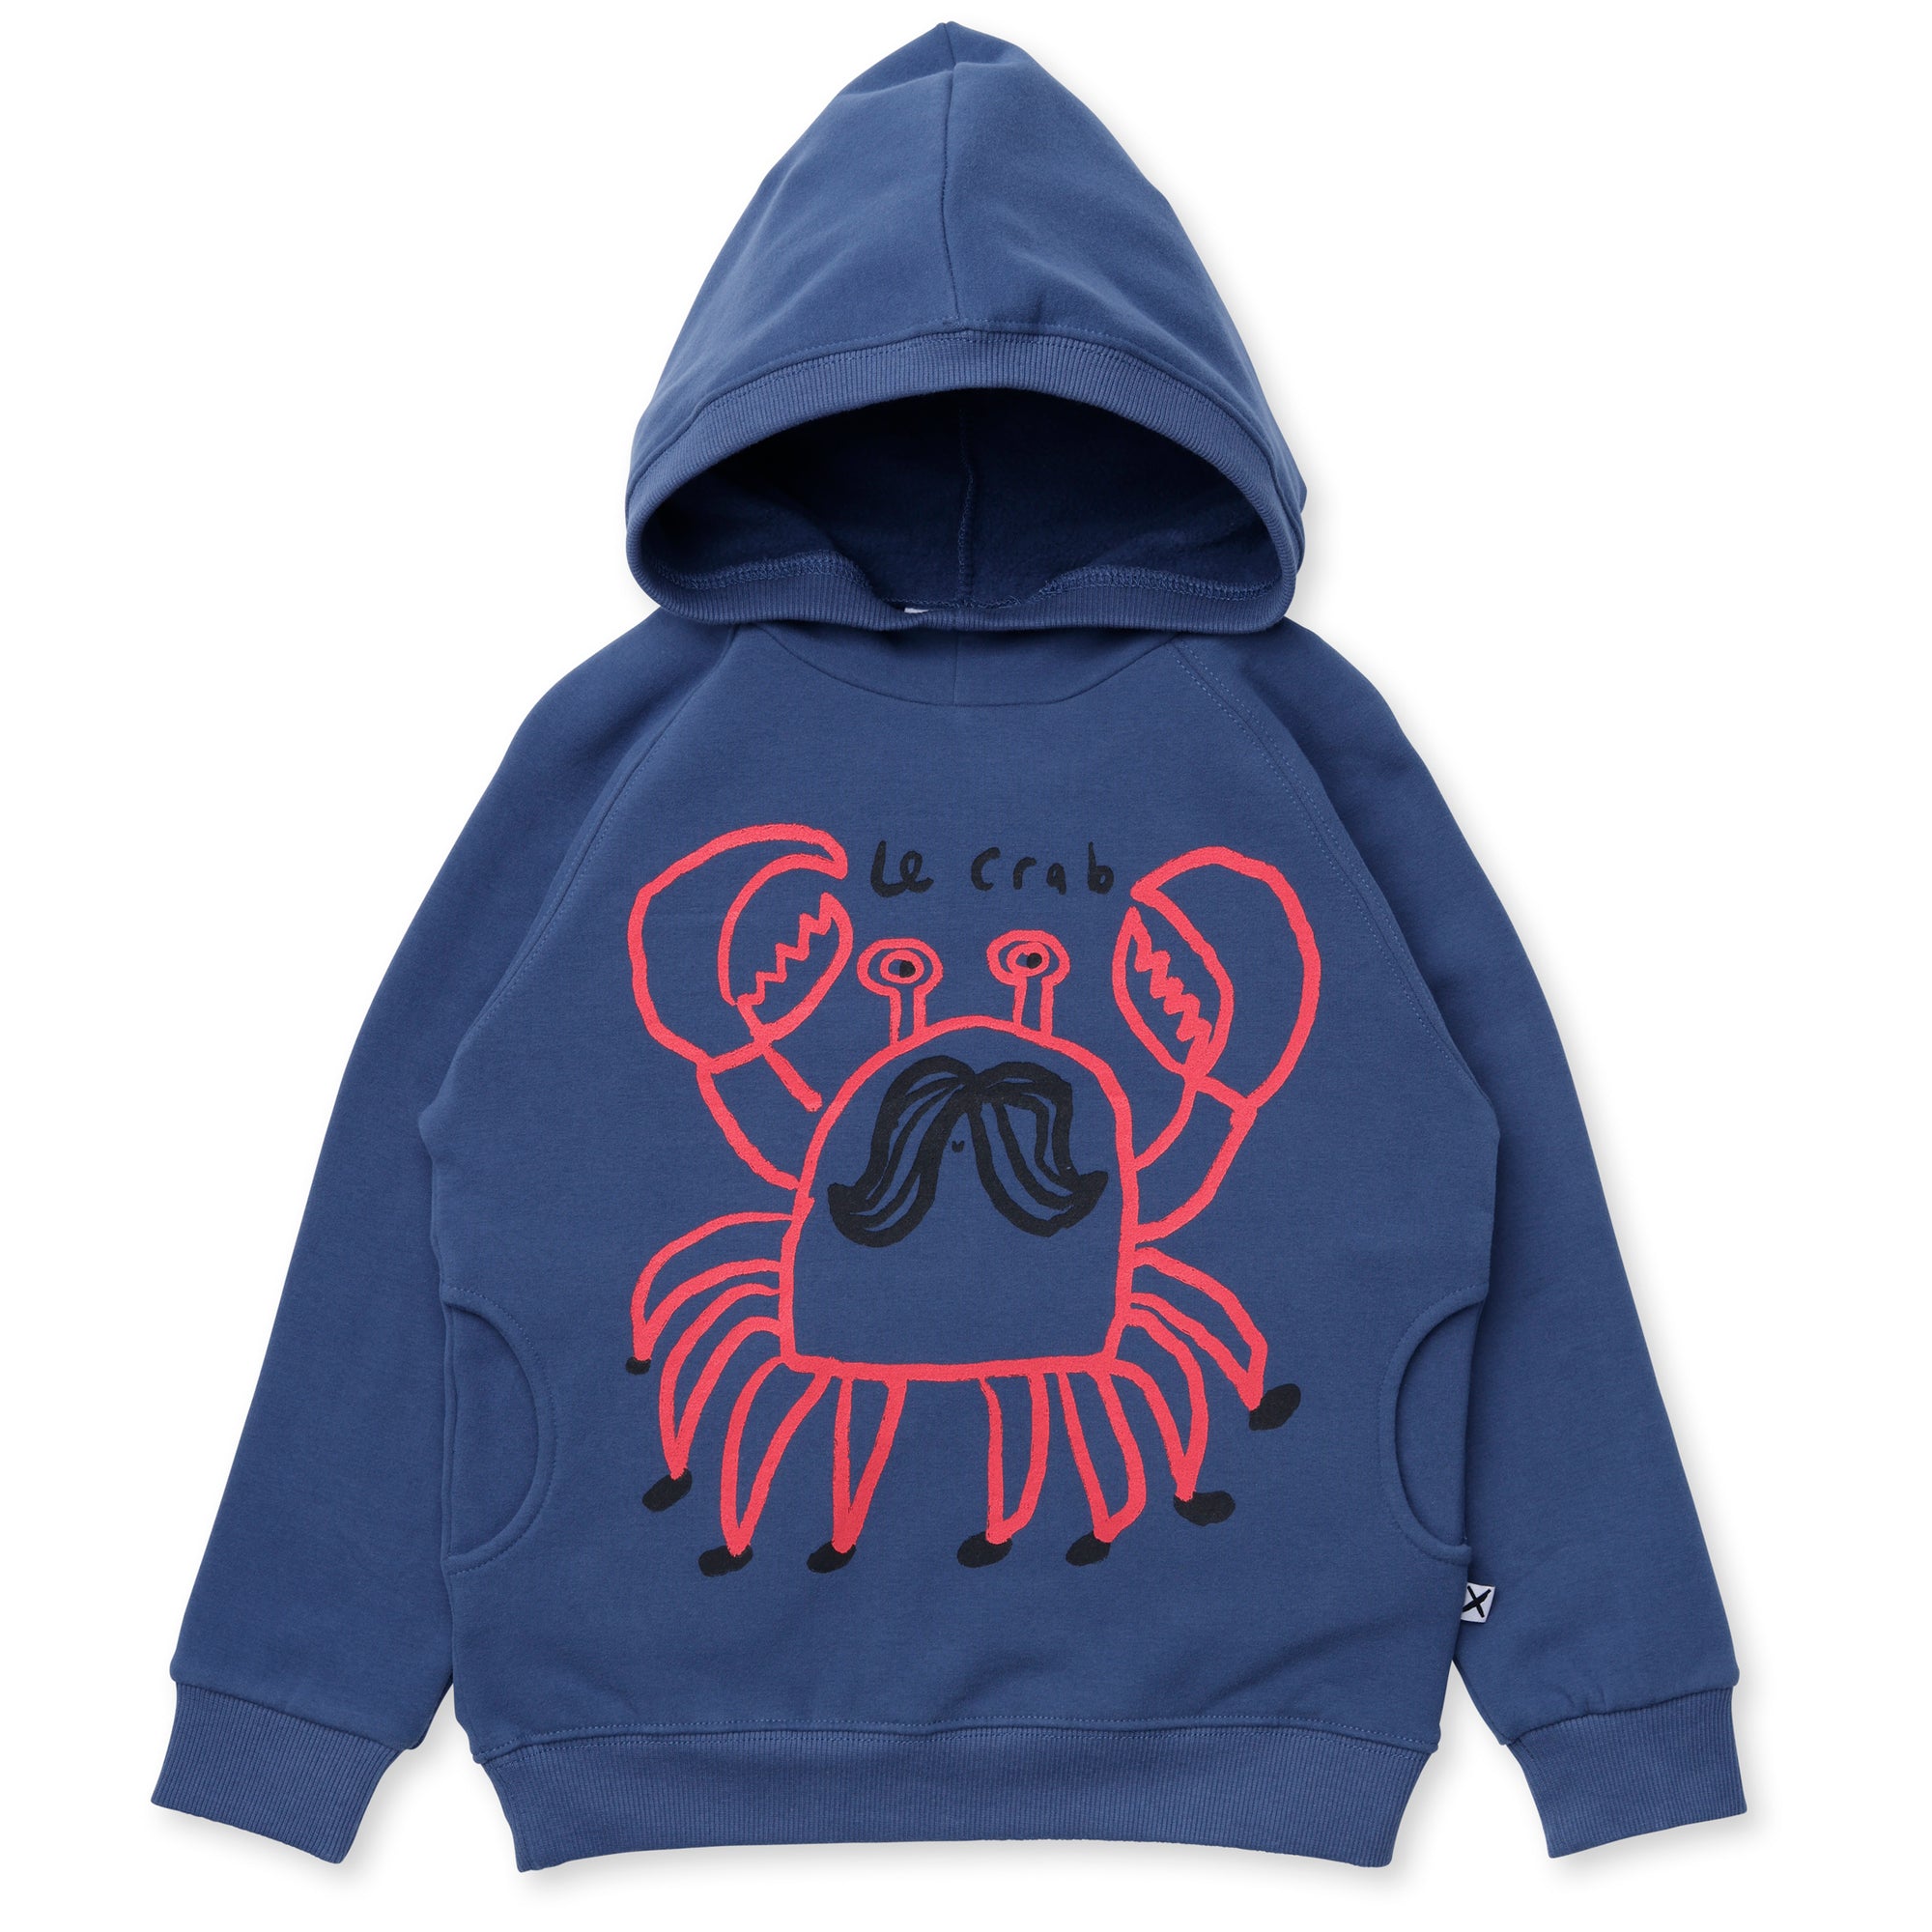 Le Crab Furry Hood